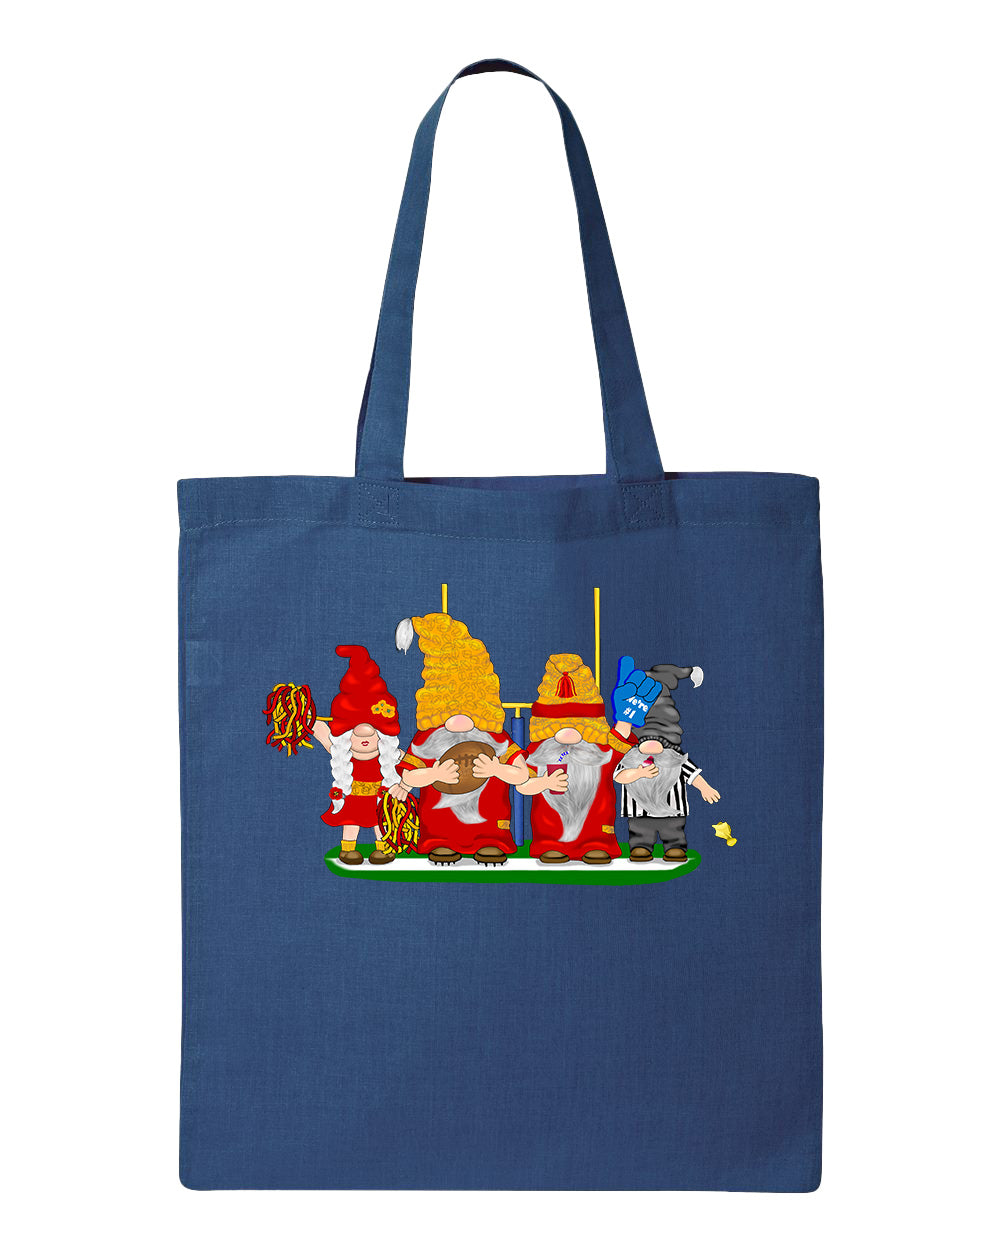 Red & Gold Football Gnomes  (similar to Kansas City) on Tote